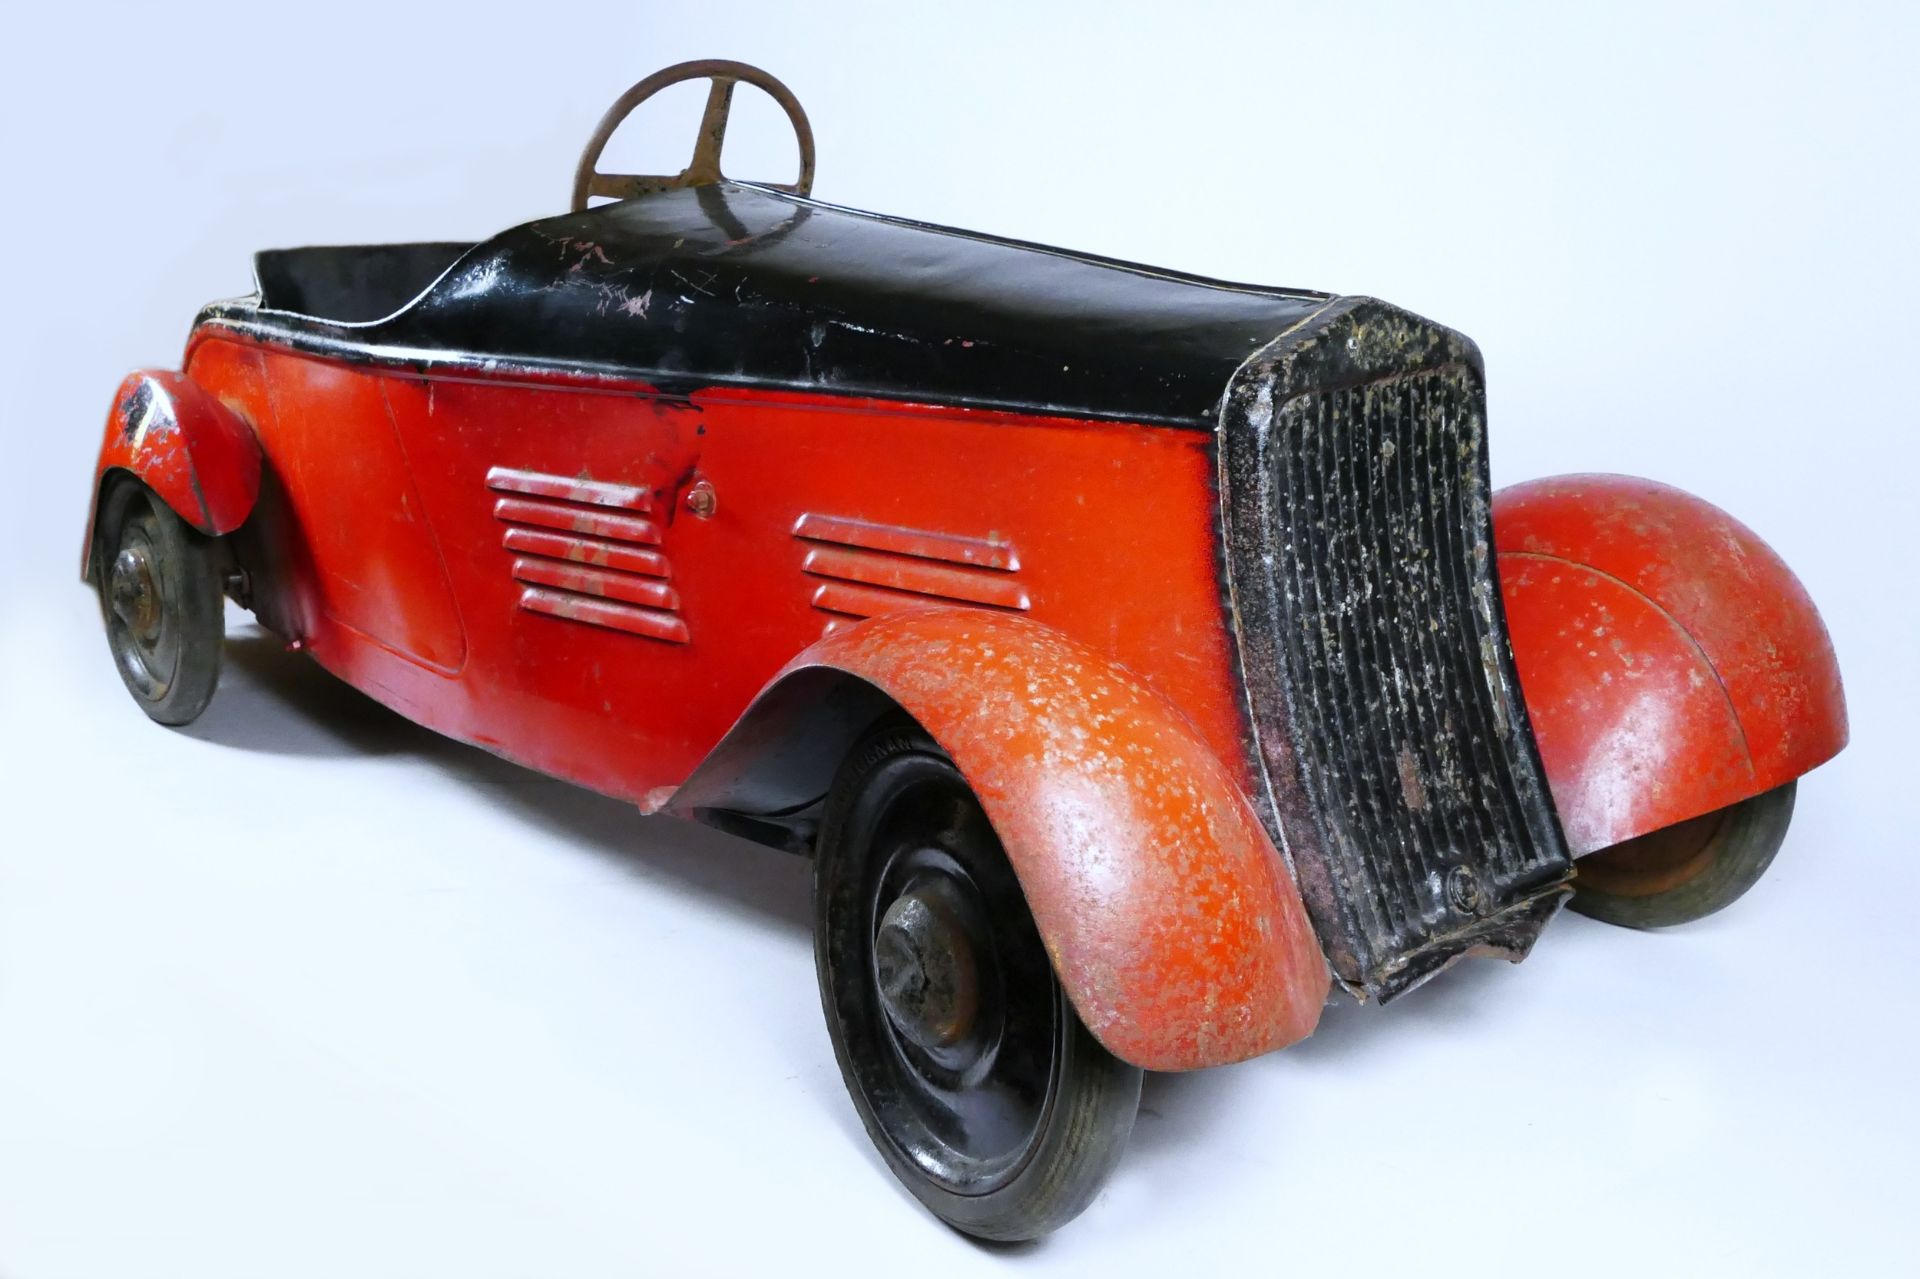 Eureka Super Junior 35 child's pedal car, c.1935-38, metal body painted in red over black, metal